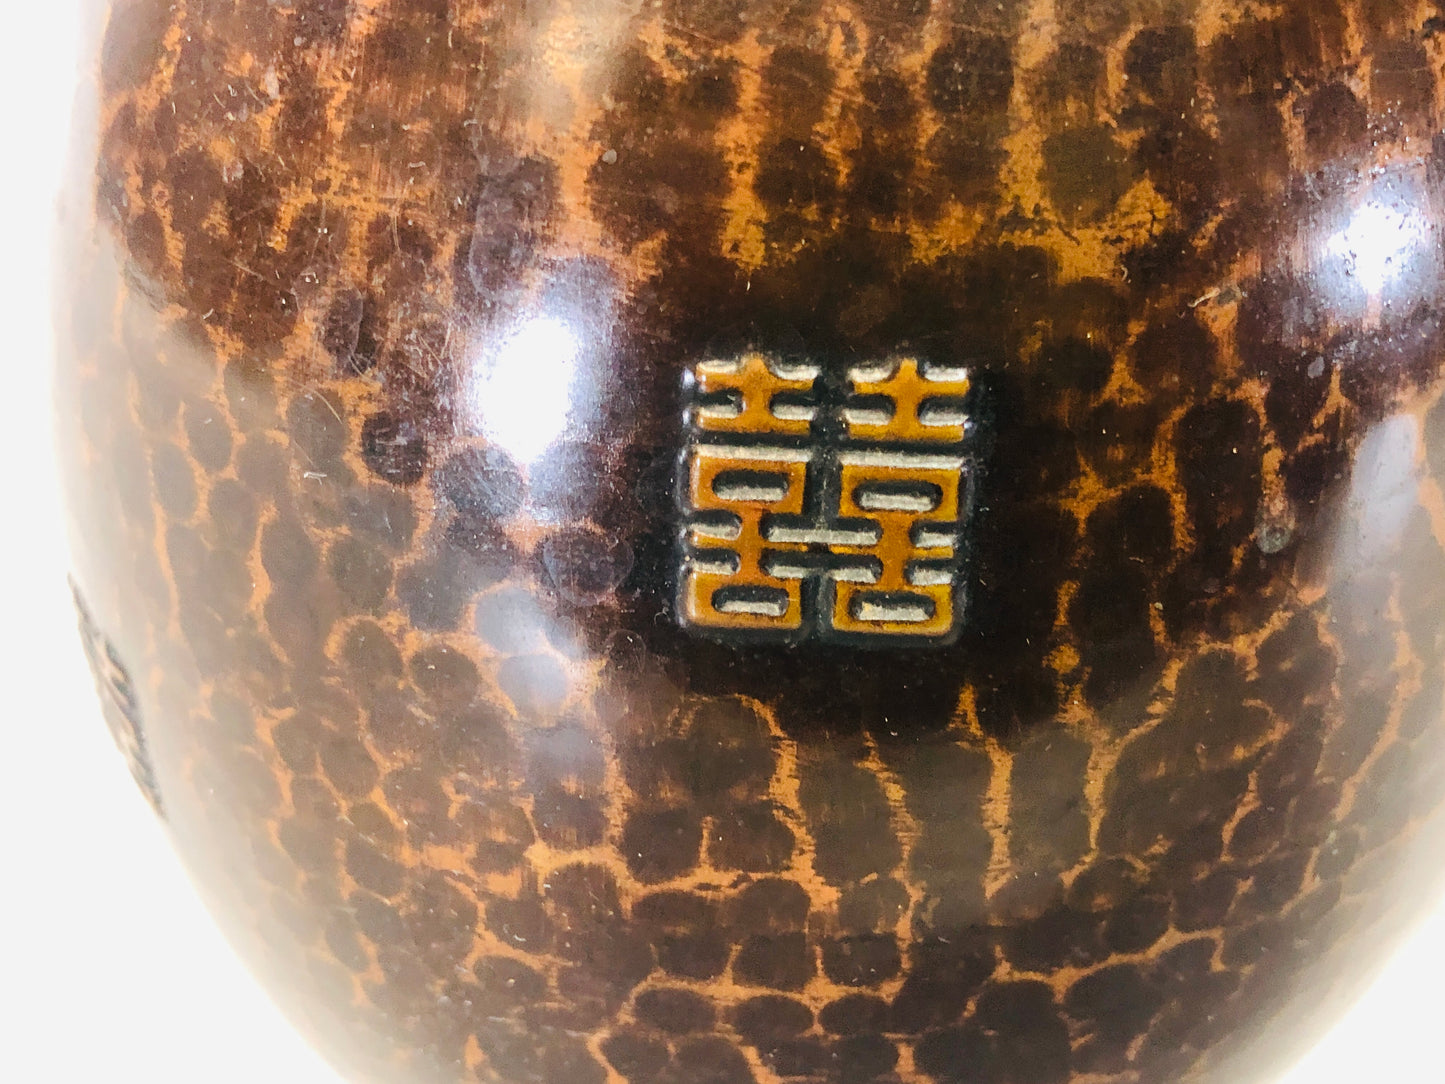 Y5358 KETTLE Copper tea pot signed teapot Chinese poetry Japan antique vintage